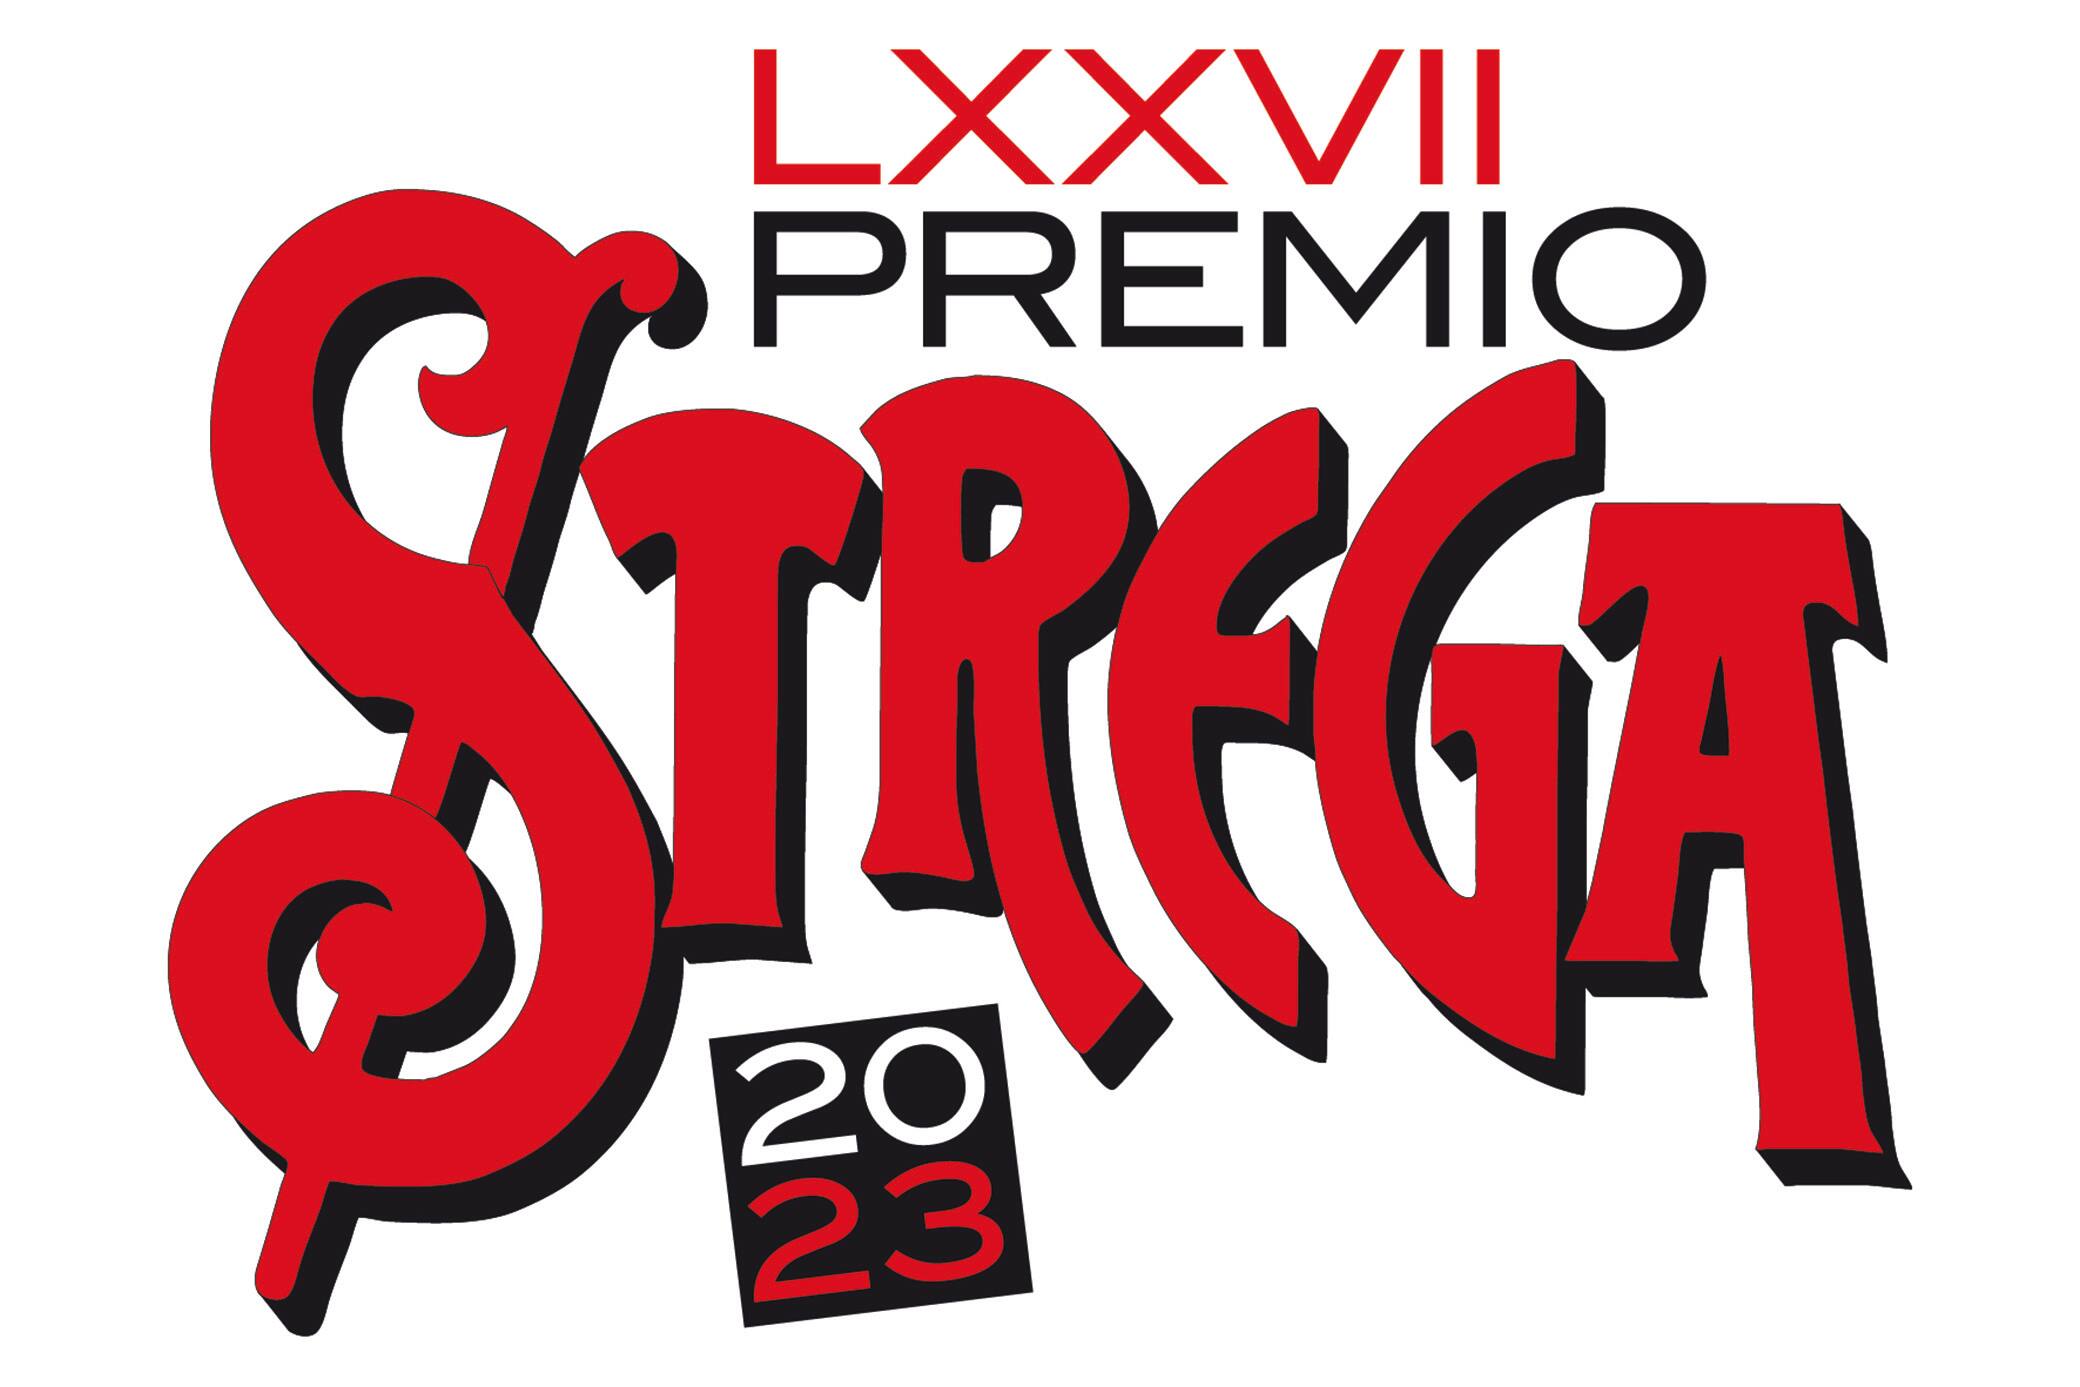 Premio Strega logo